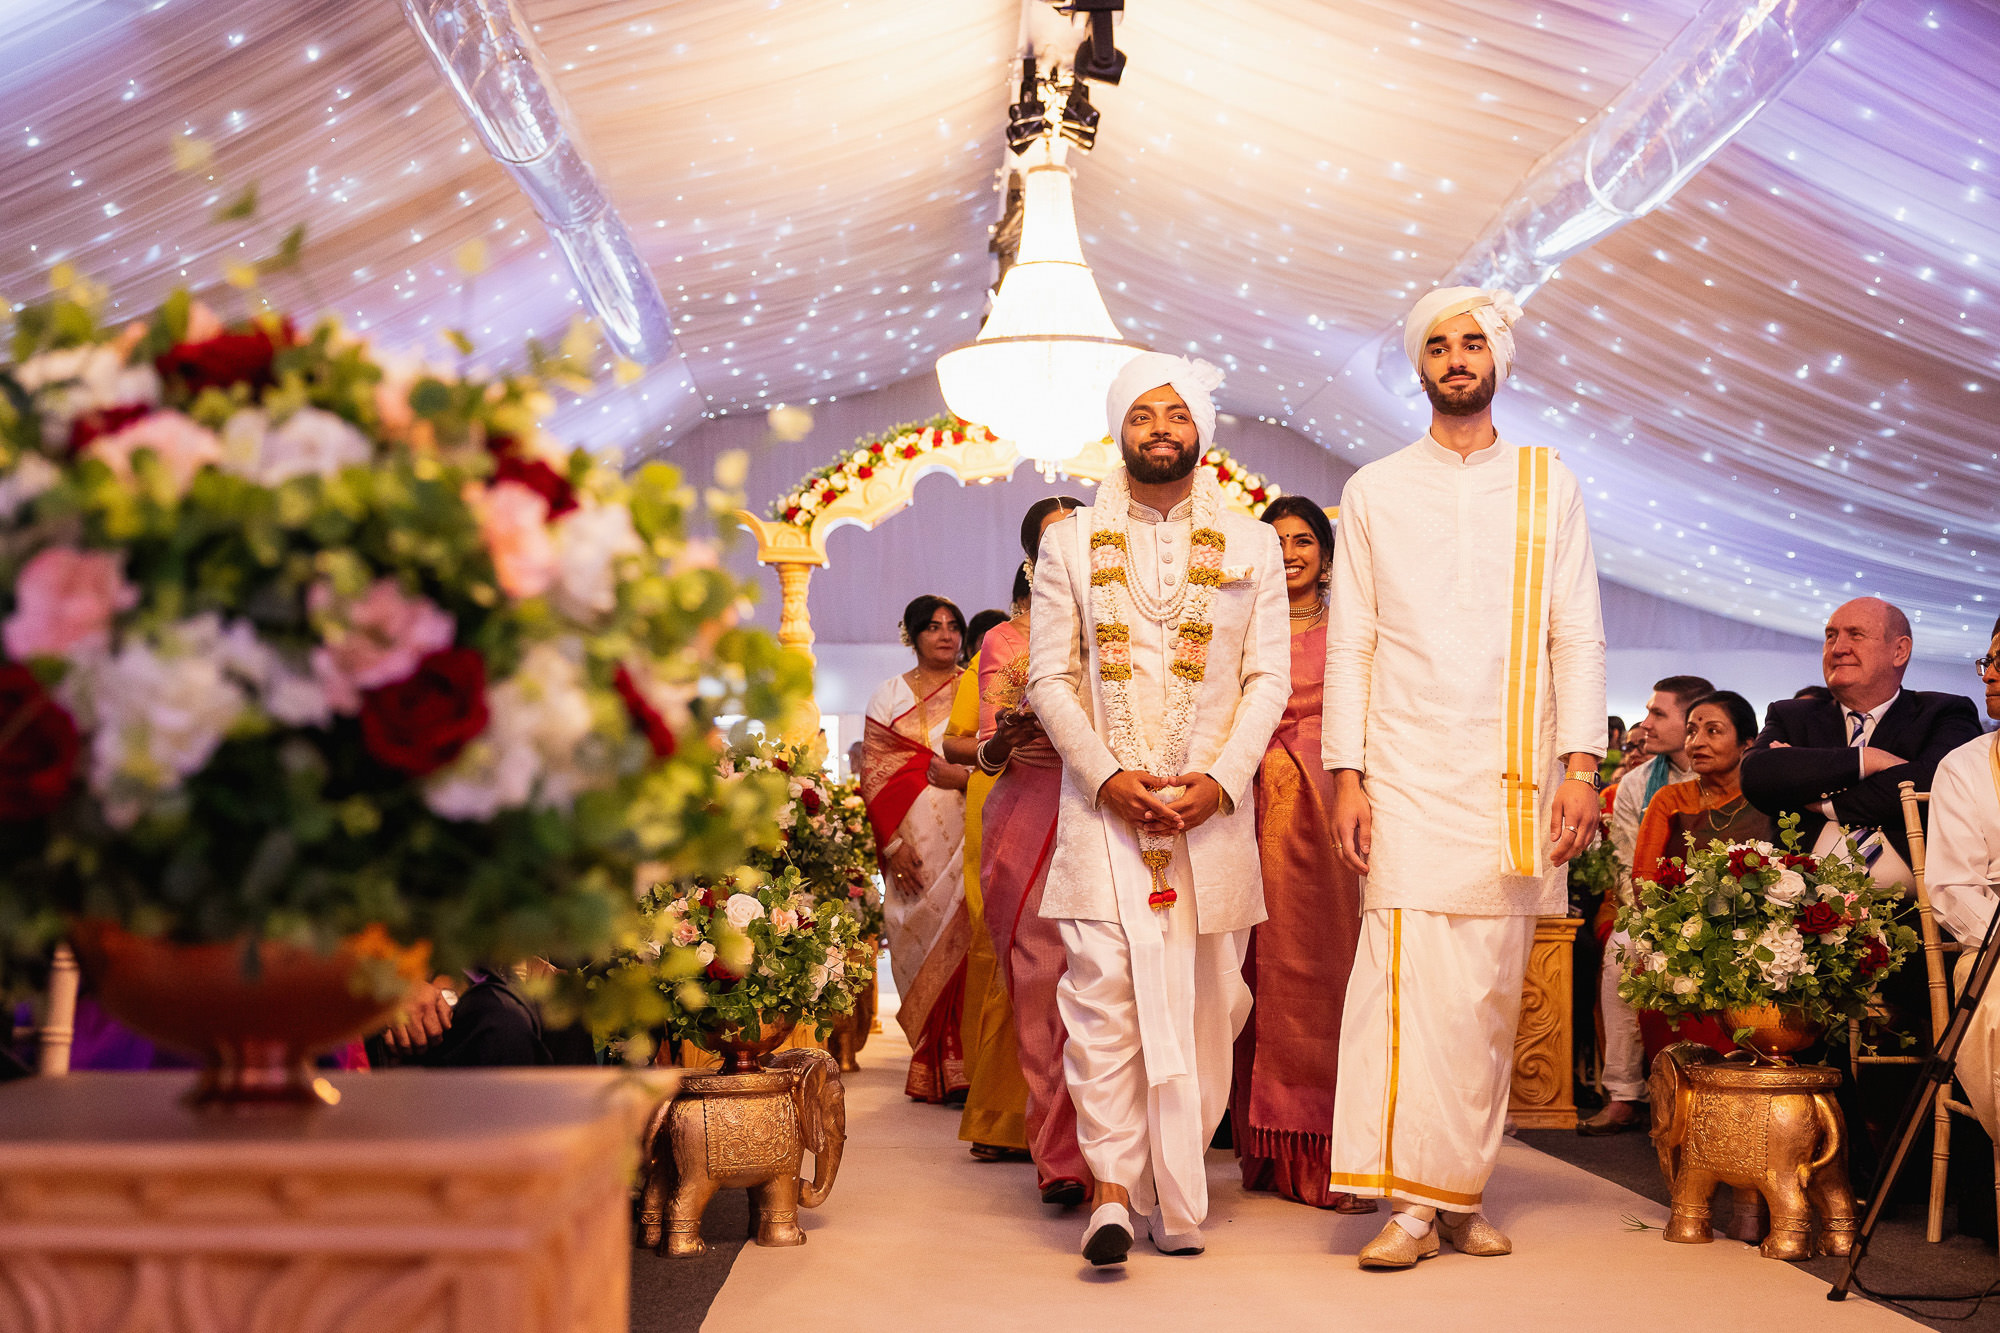 Tamil Wedding, Tamil Wedding Photographer, Stockley Park, Religious ceremony, groom arrival